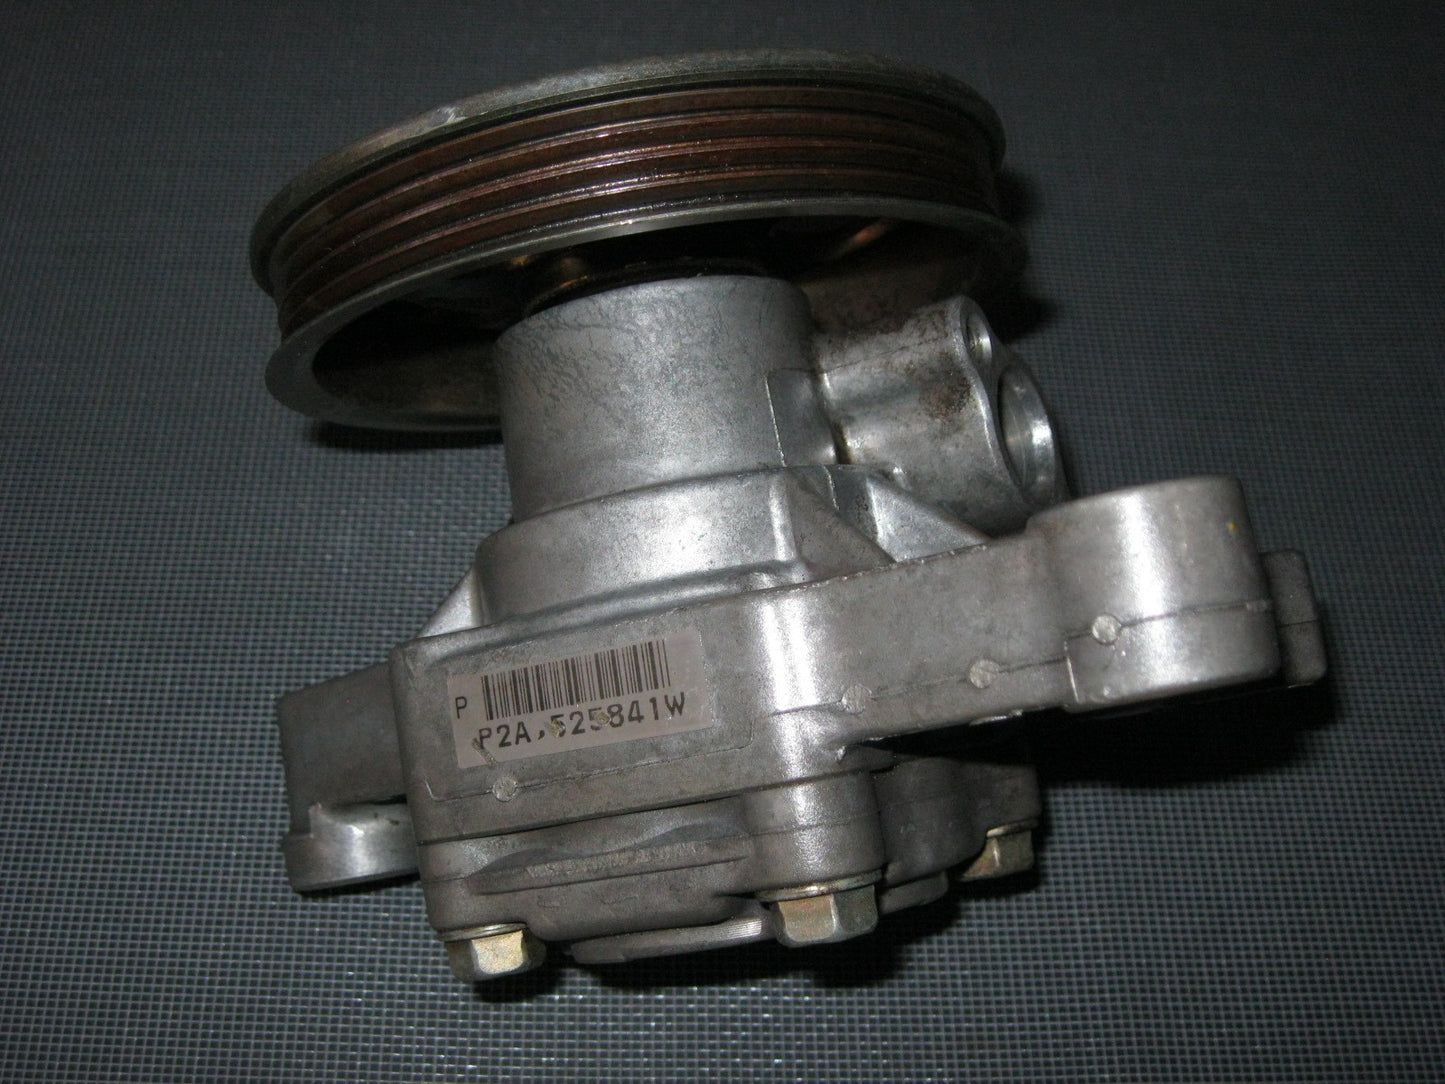 96-00 Honda Civic D14A3 DPFi SFi OEM Power Steering Pump